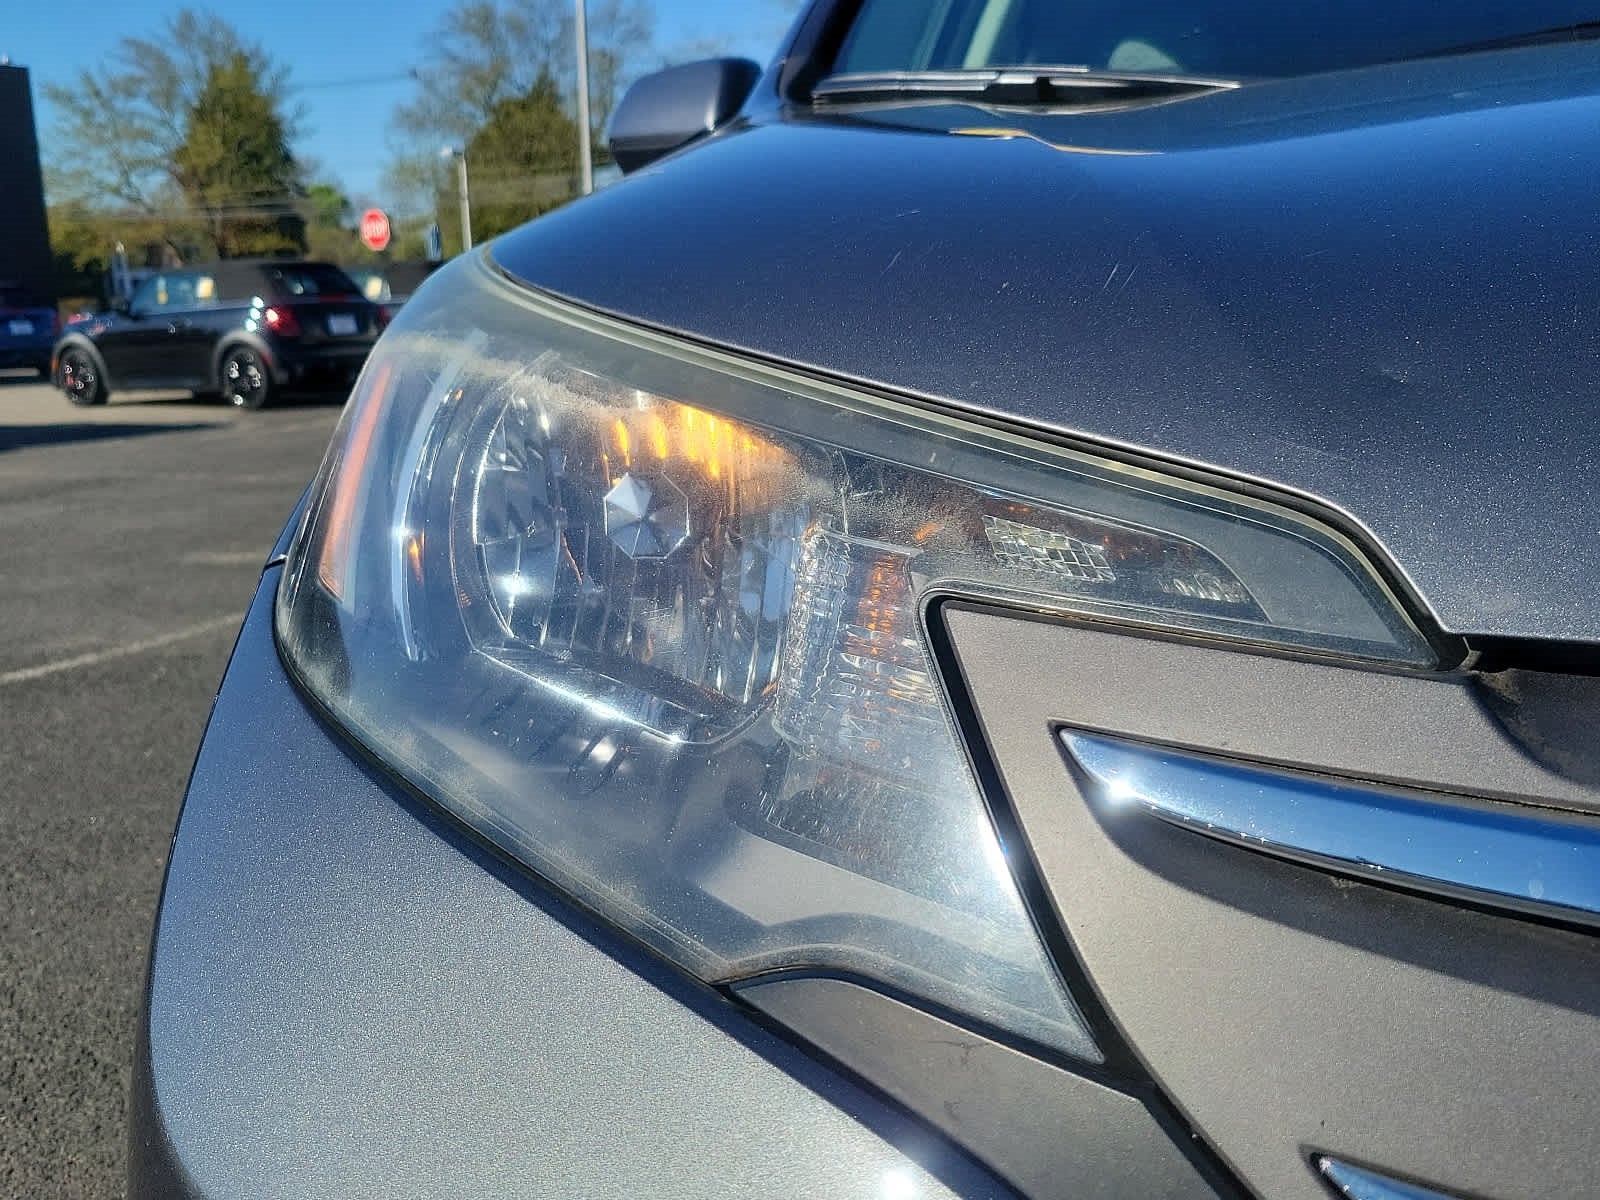 2014 Honda CR-V AWD 5dr EX-L w/Navi